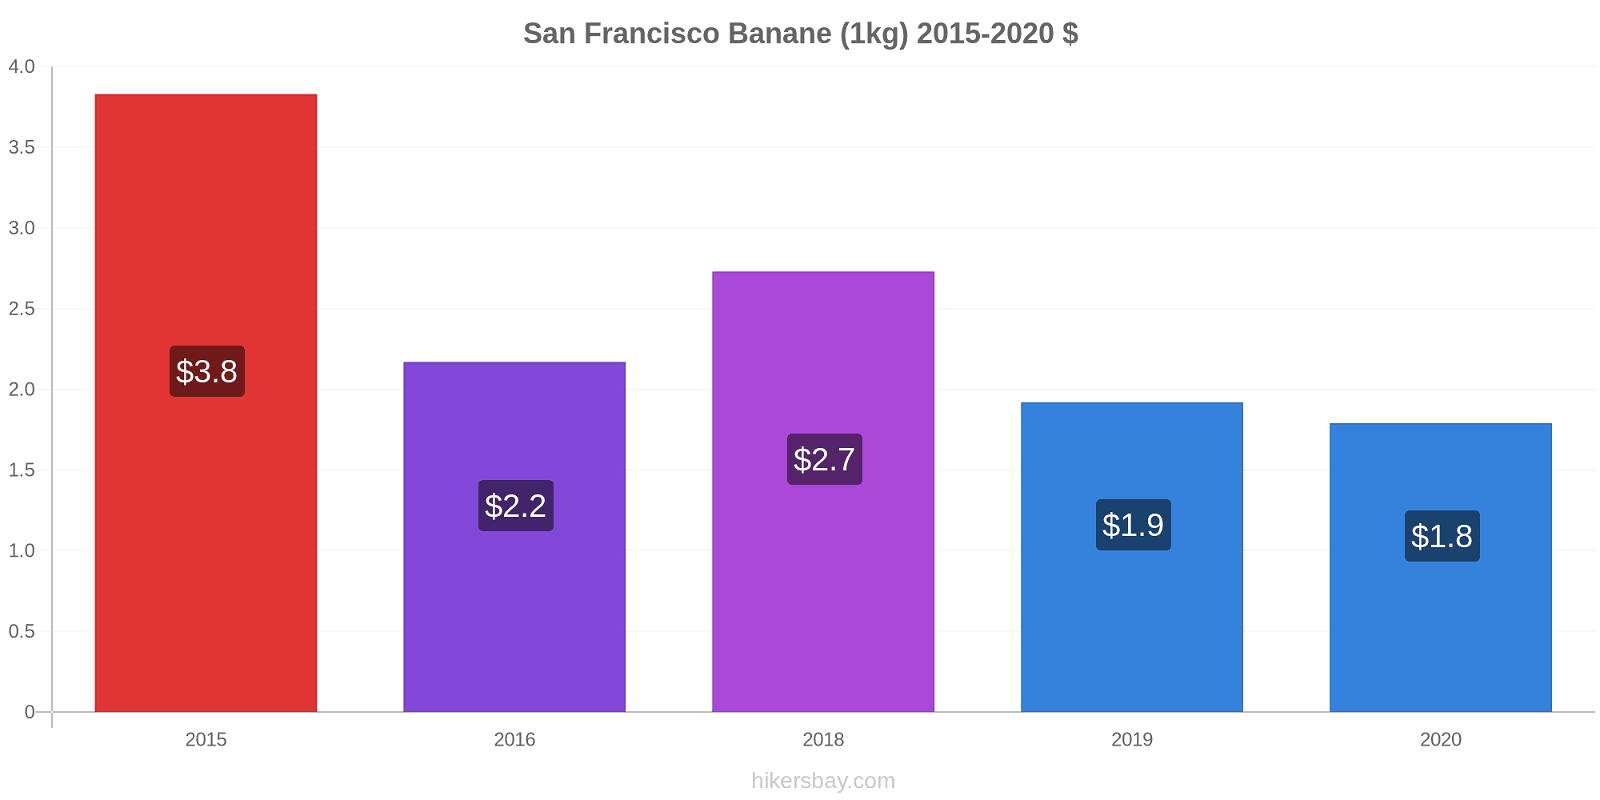 San Francisco variazioni di prezzo Banana (1kg) hikersbay.com